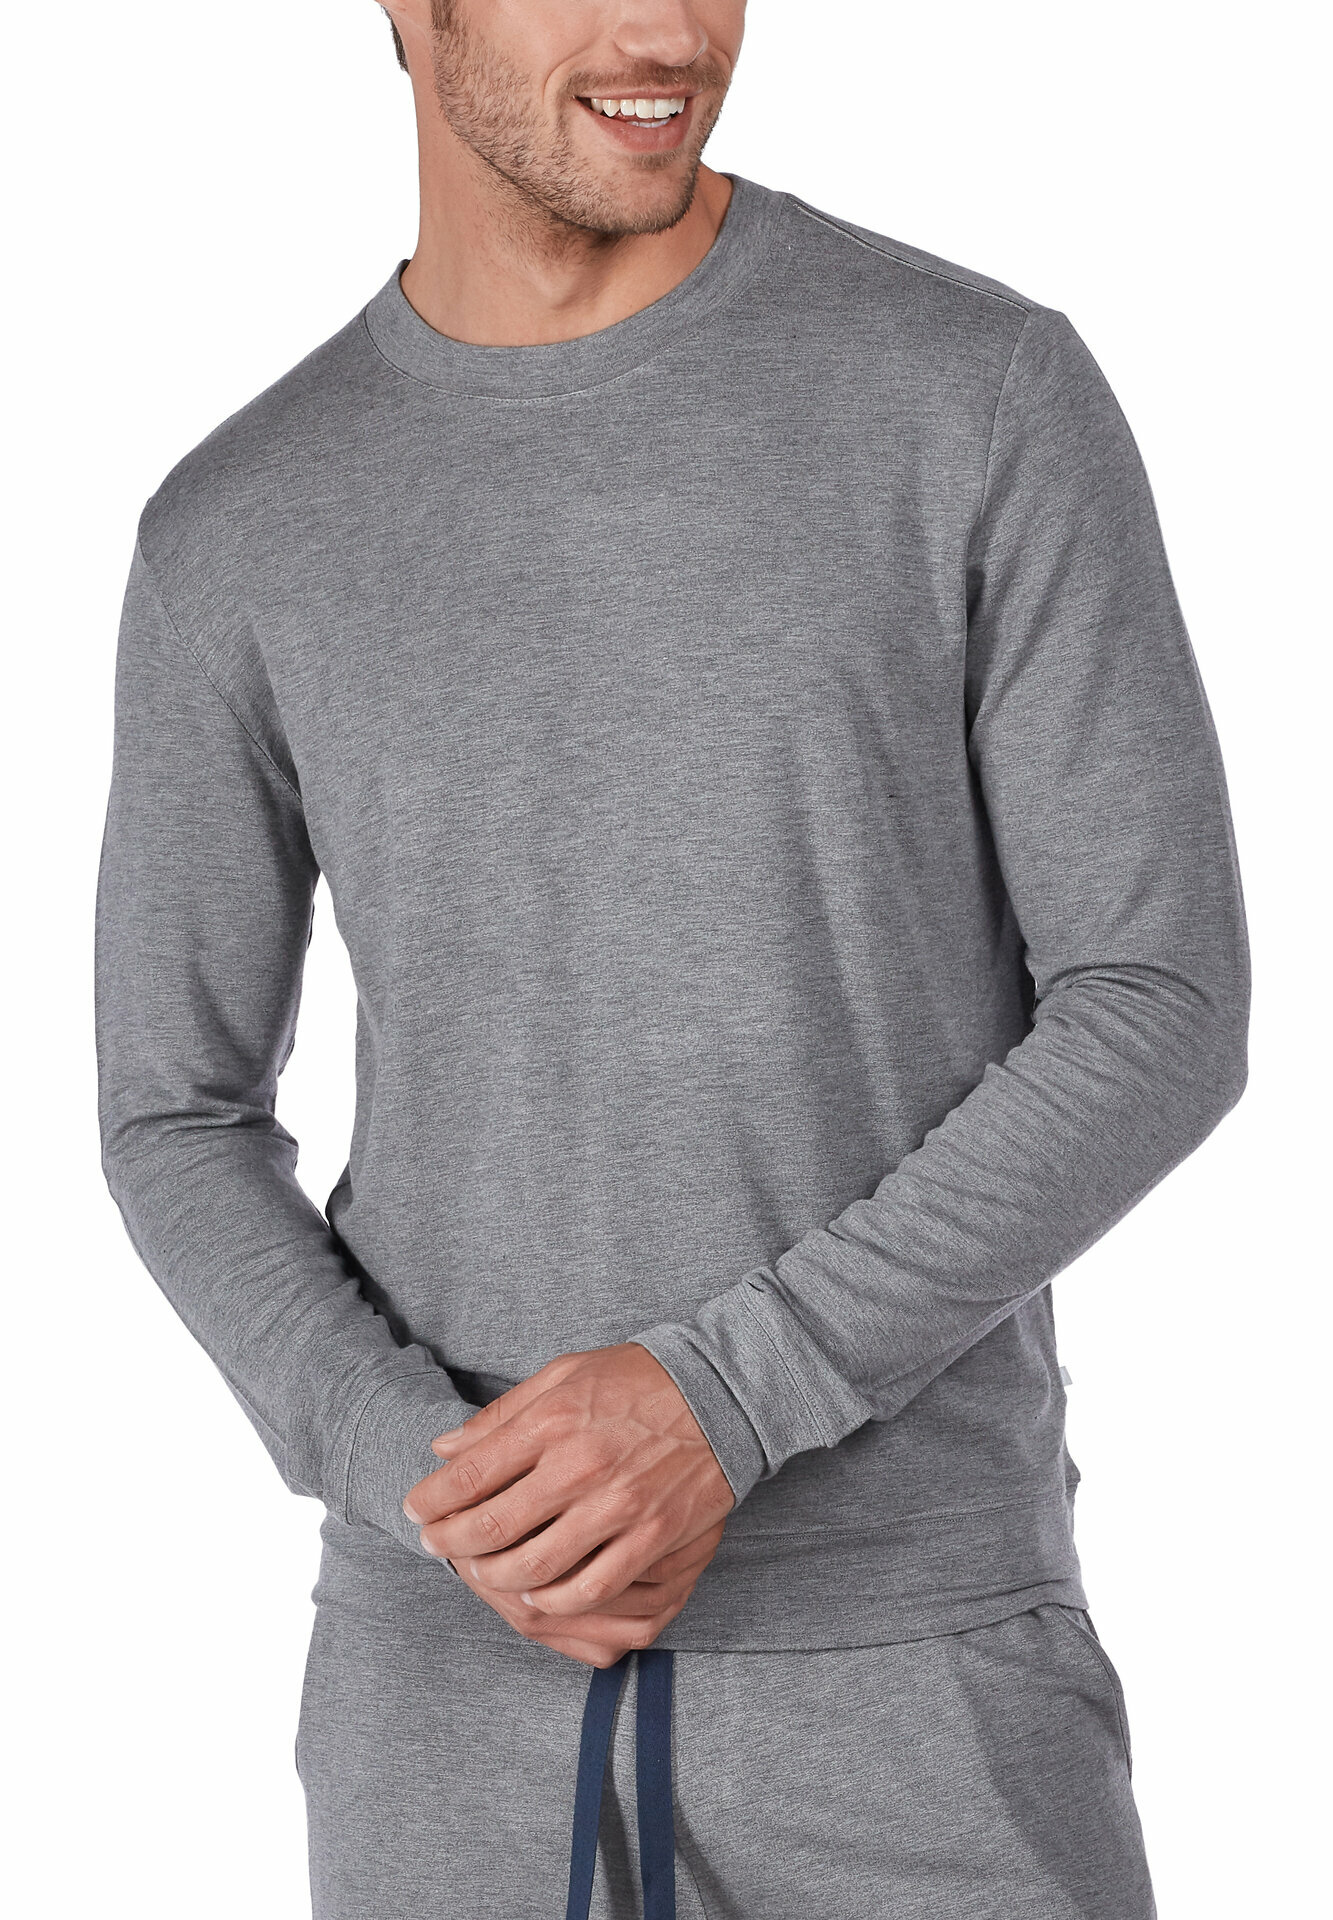 Huber Homewear/Loungewear hautnah Home Basic Selection Herren Sweatshirt